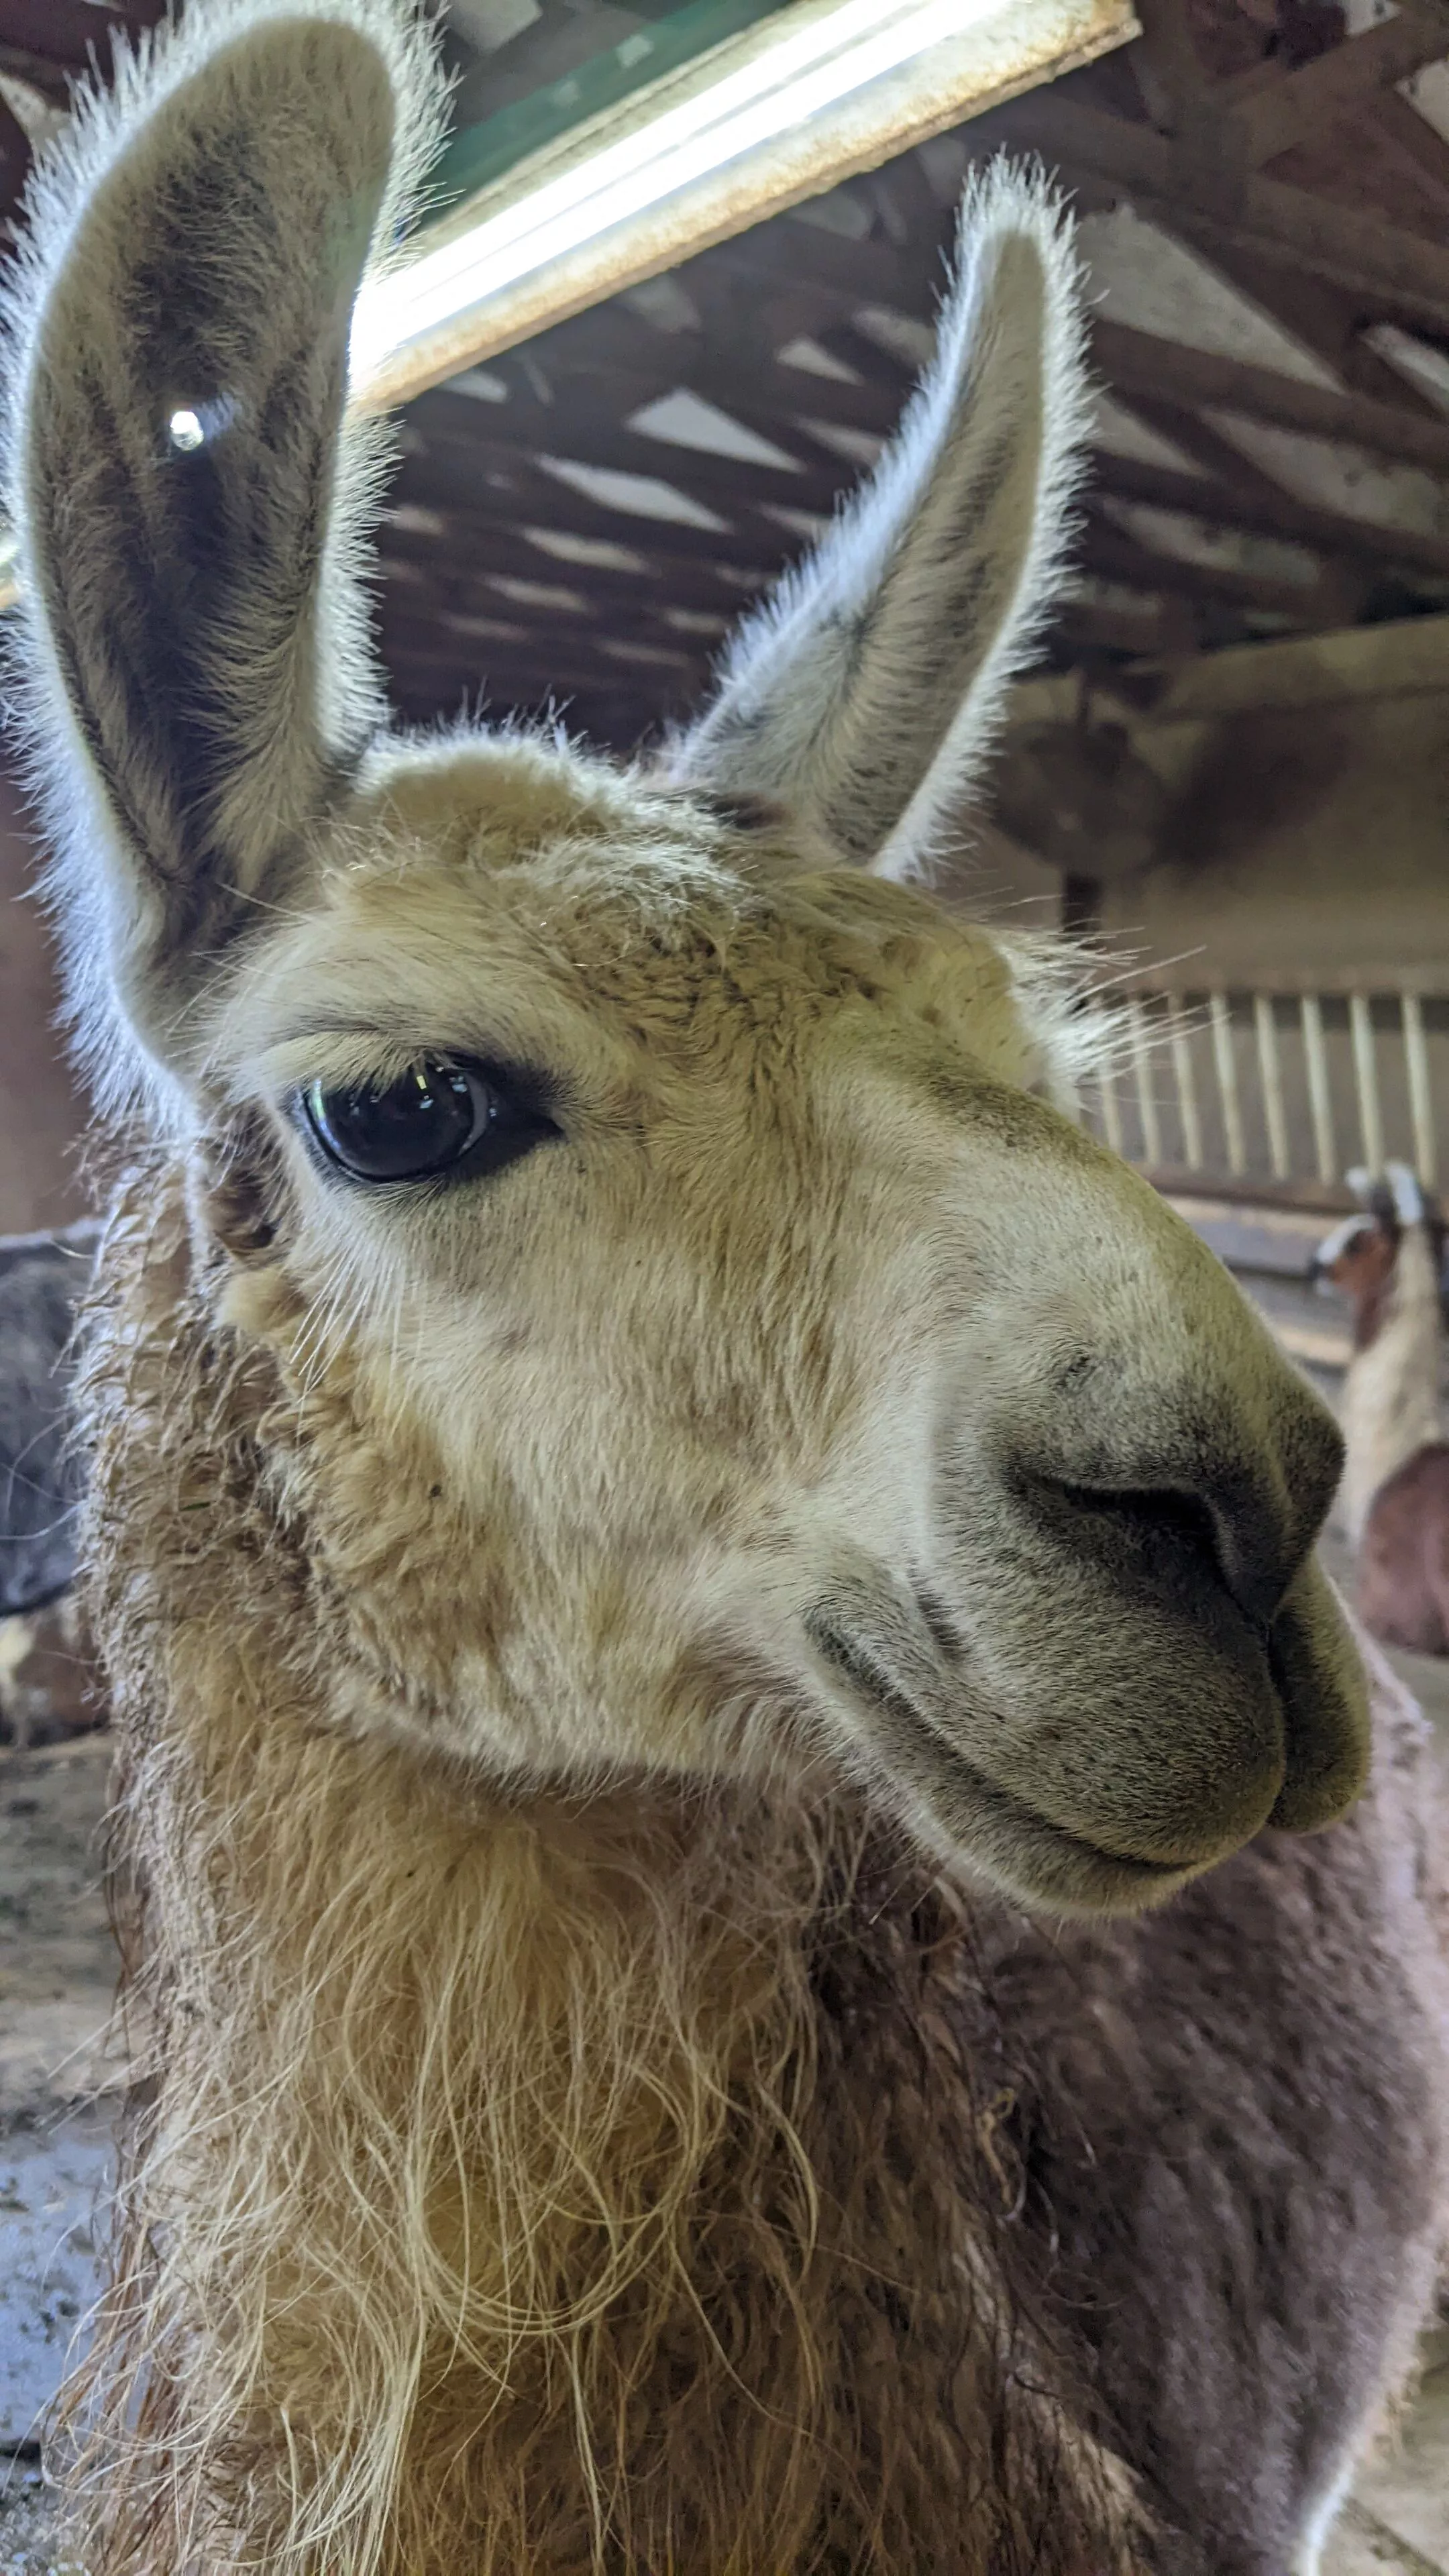 An image of a llama named Lottie